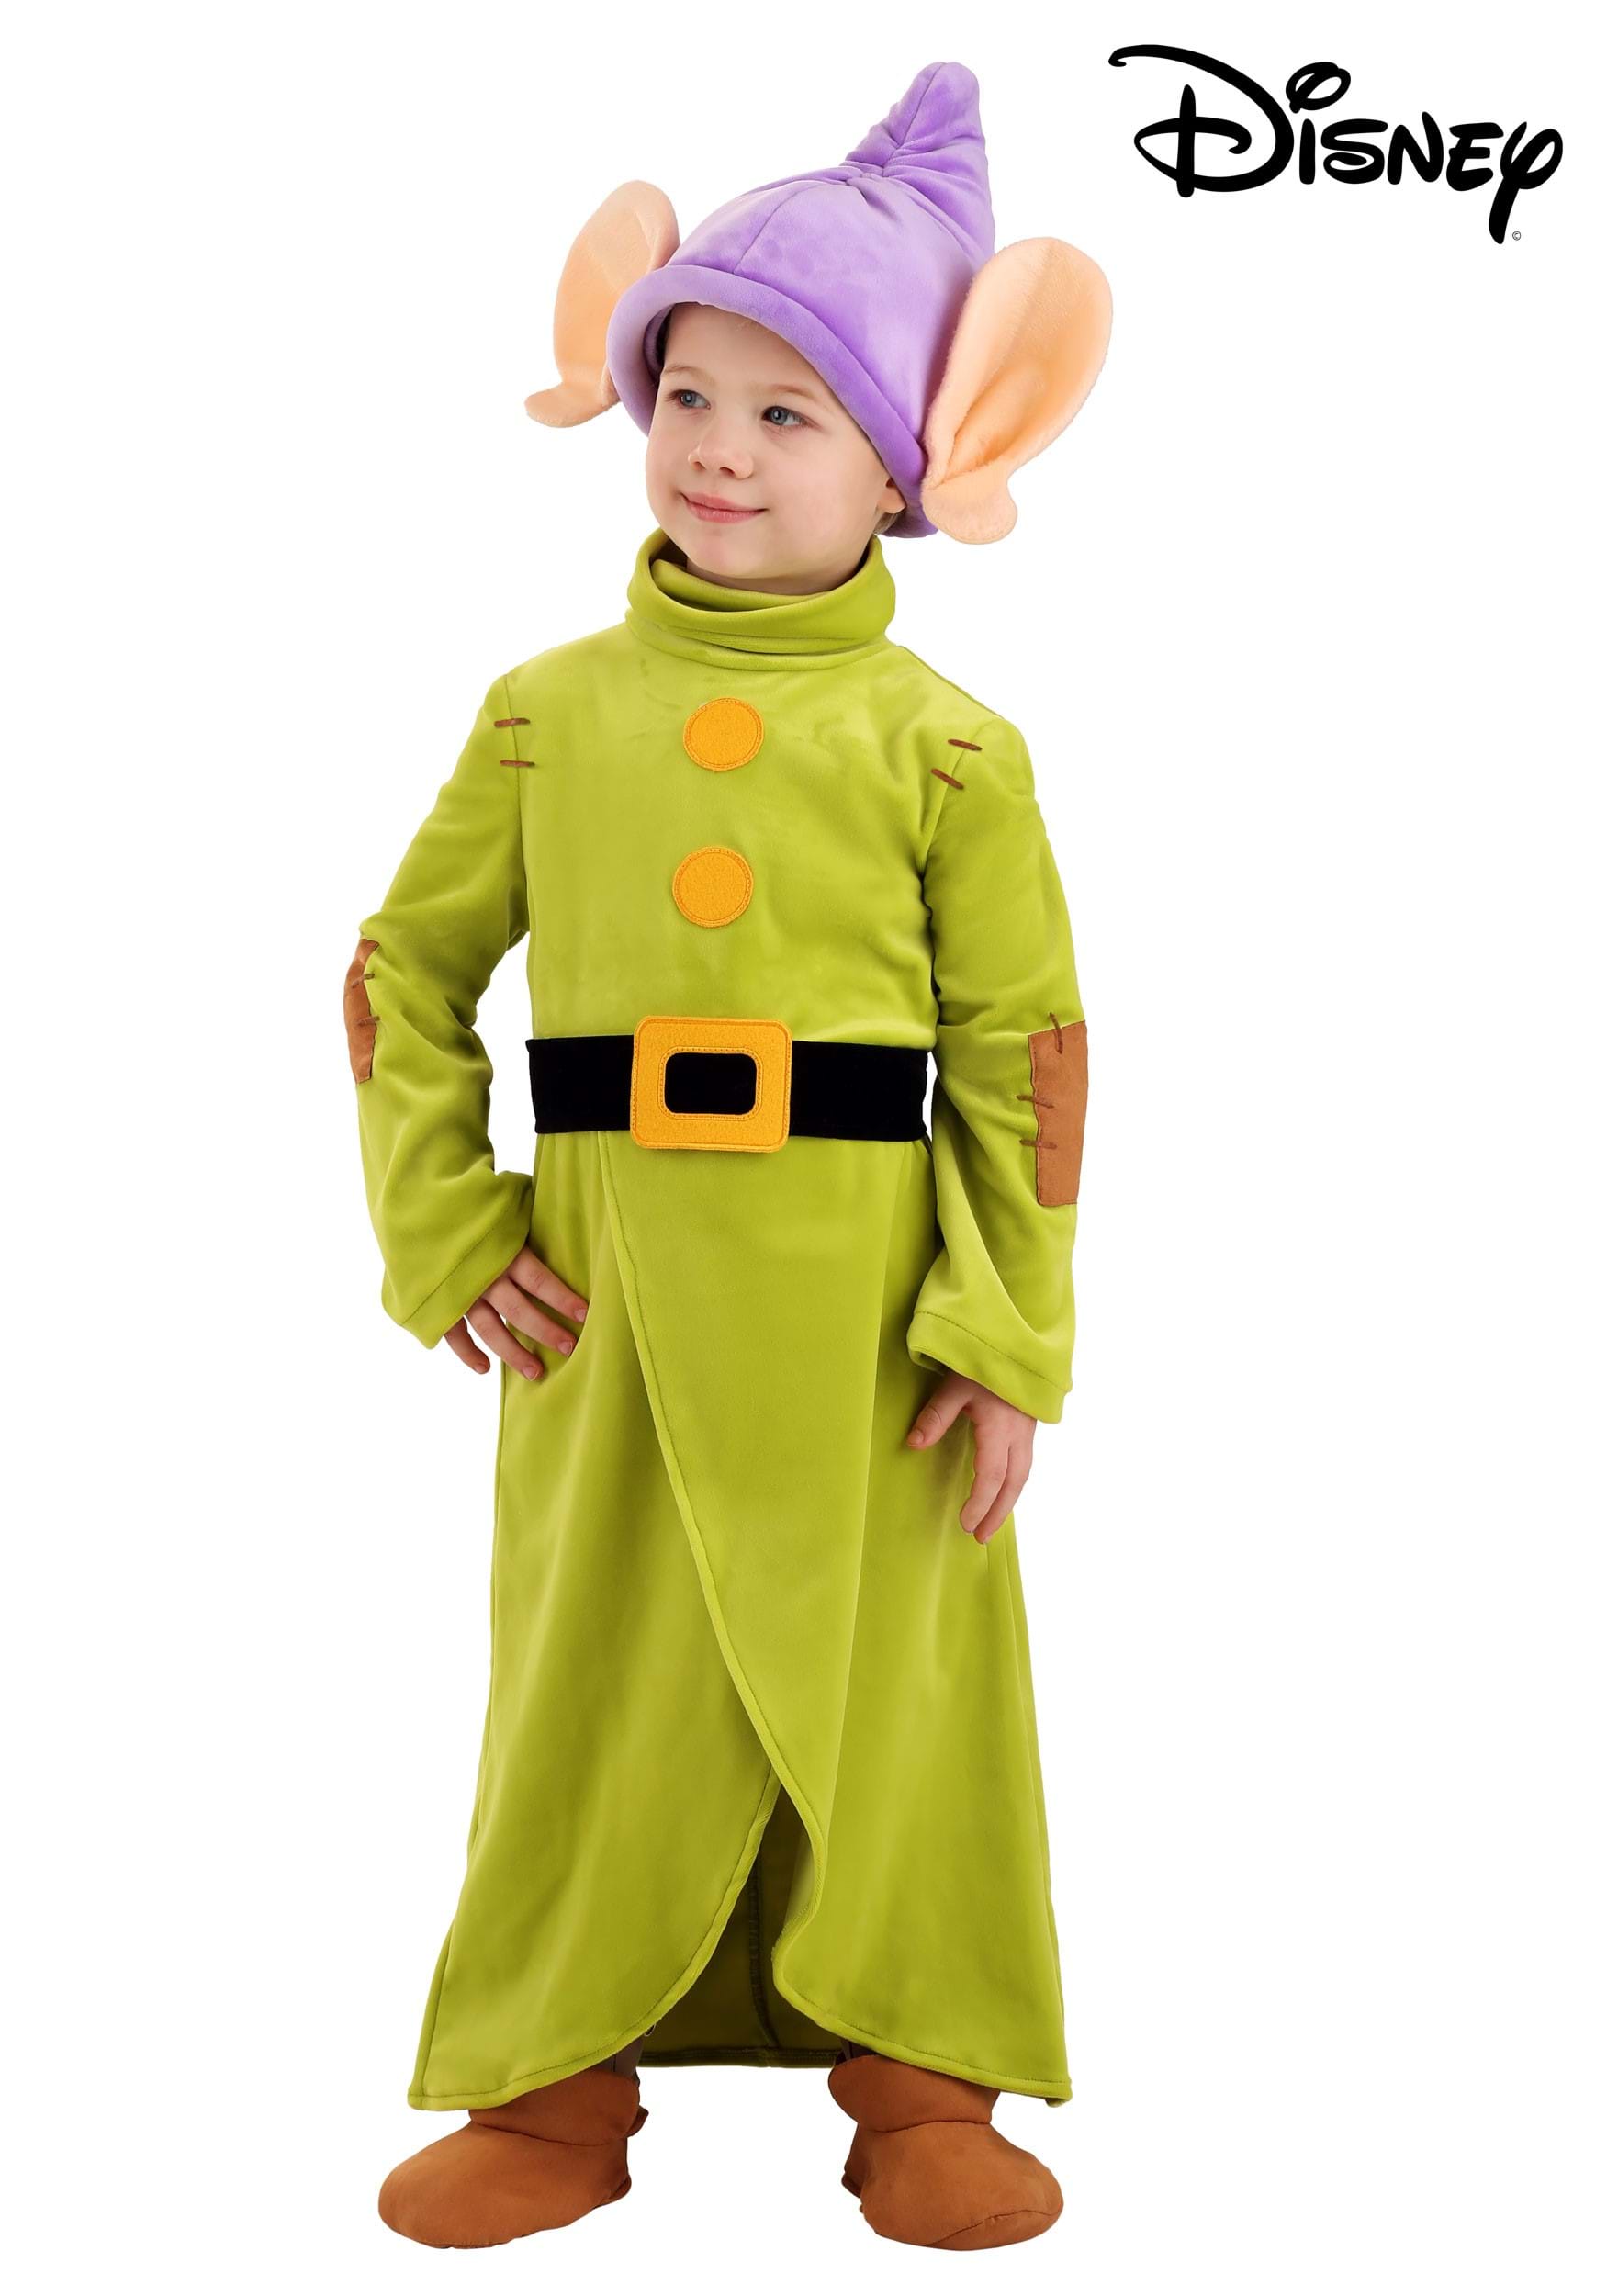 grumpy dwarf costume for girls